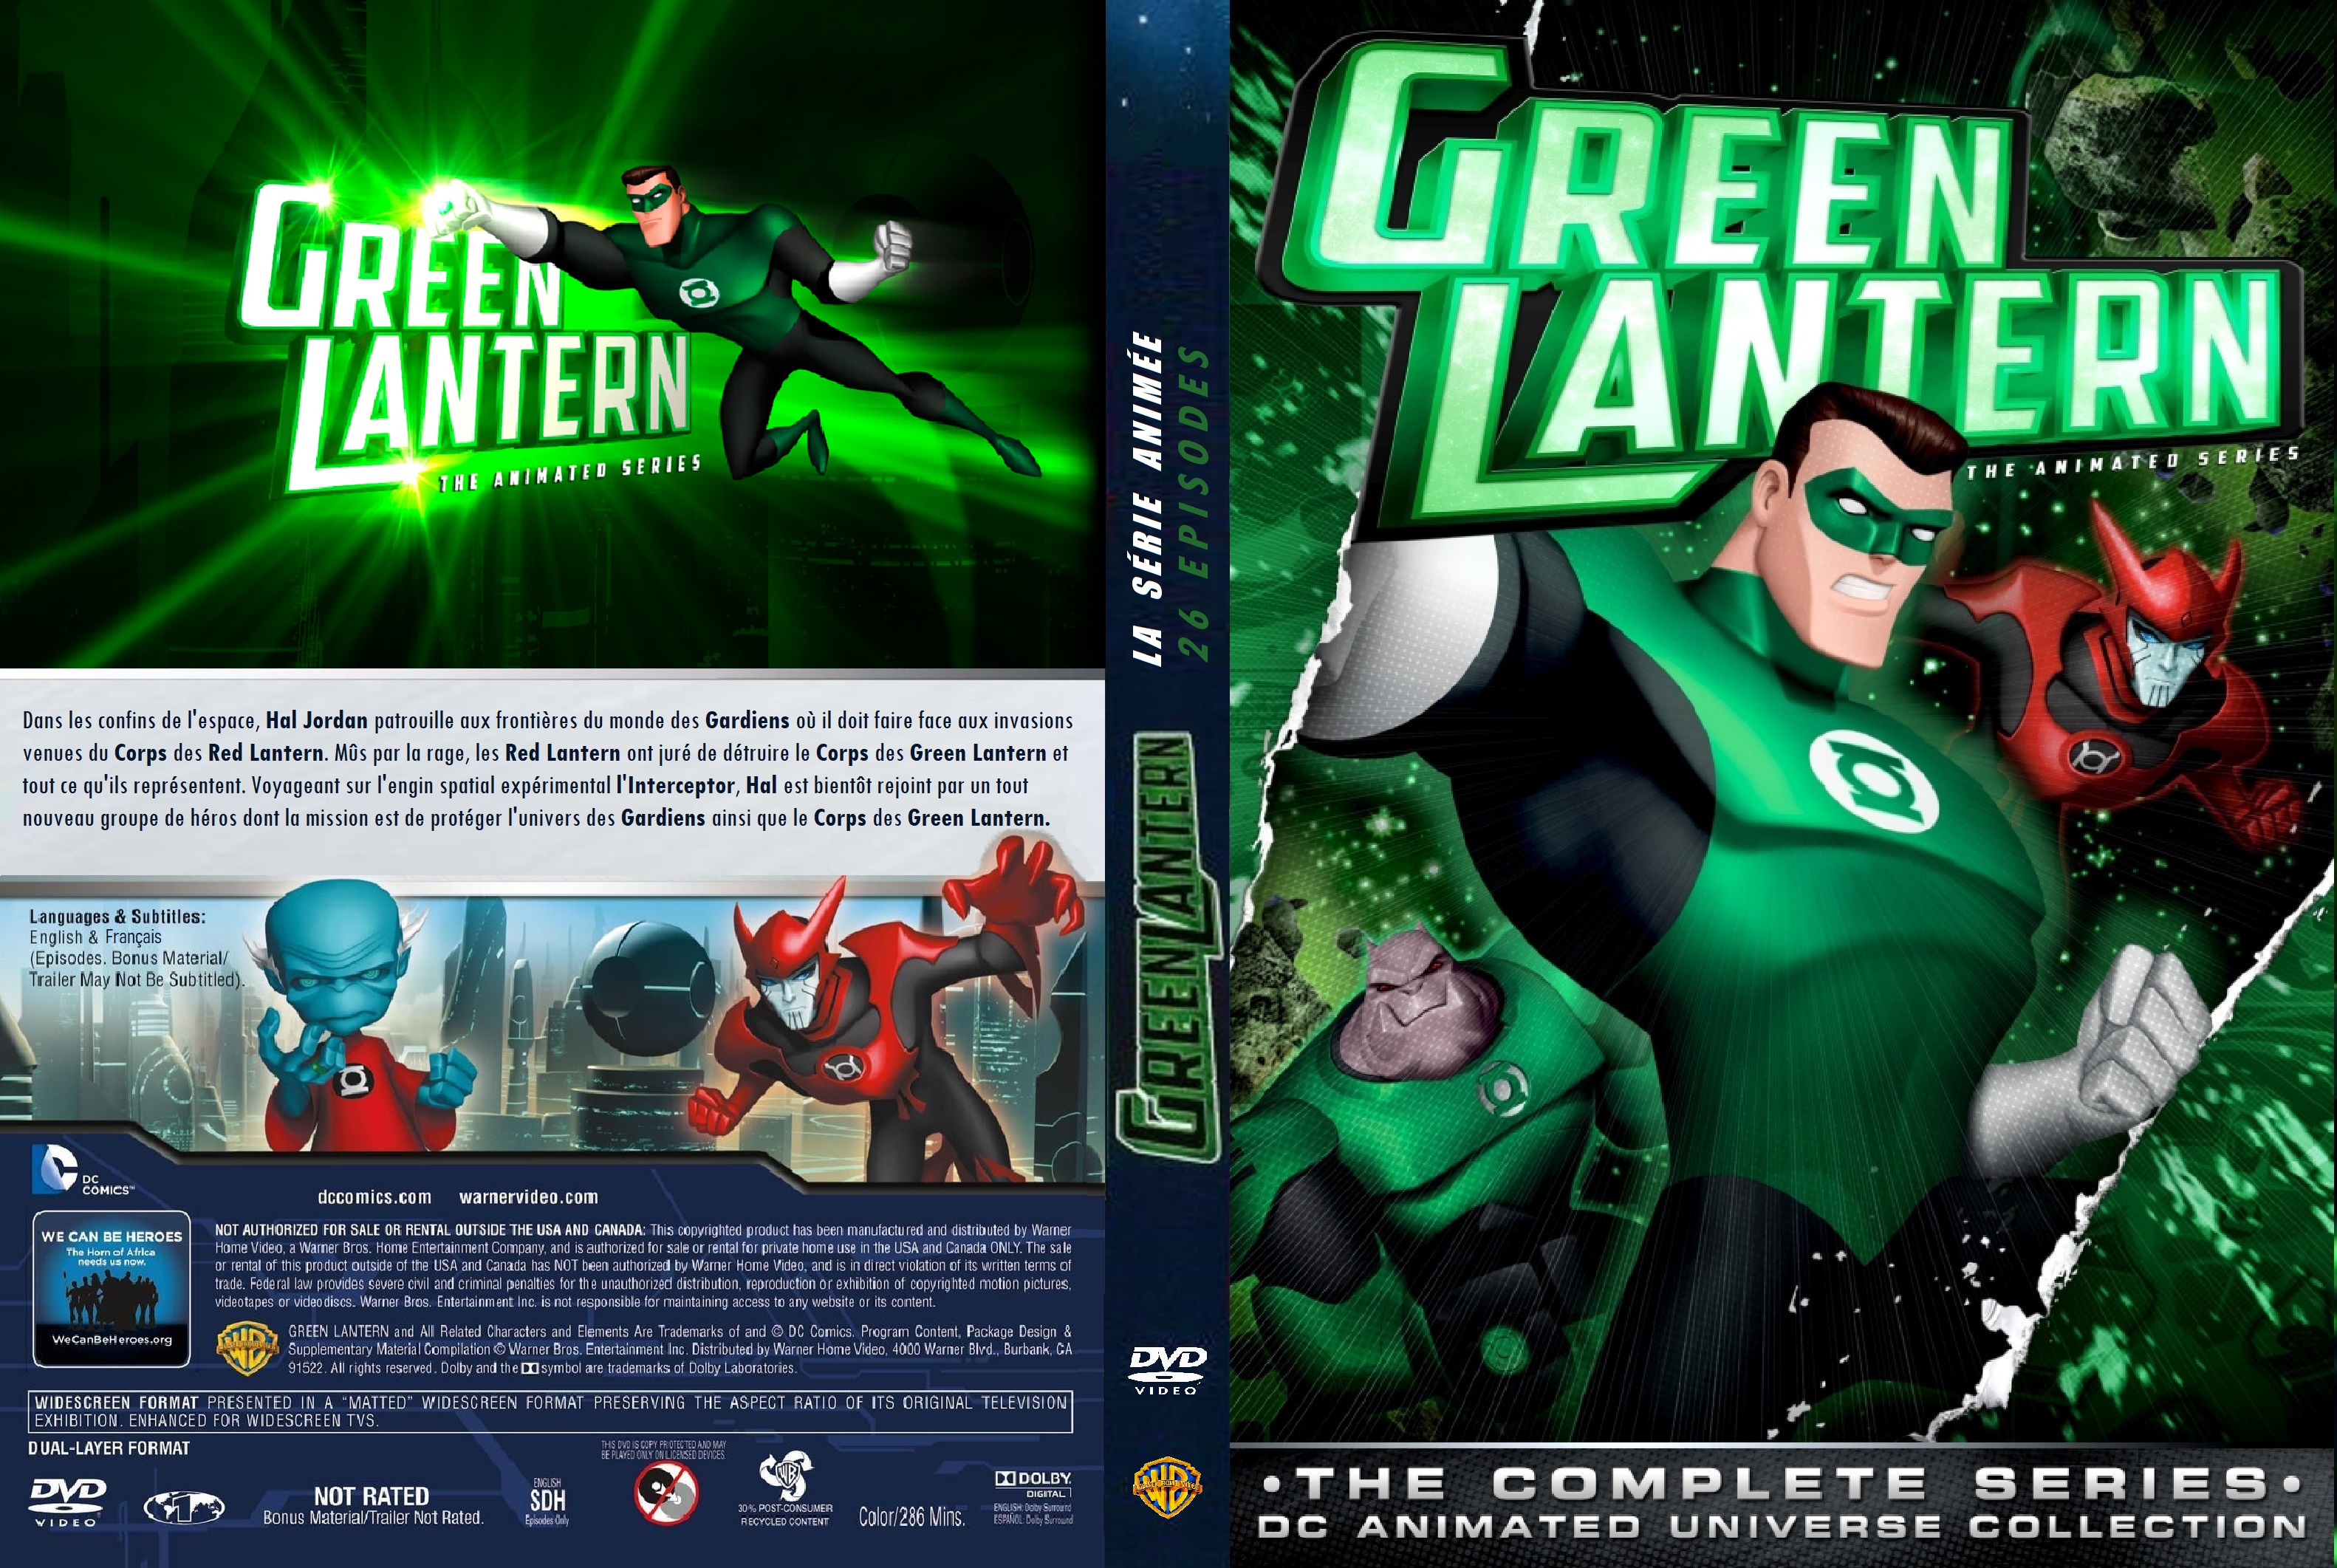 Jaquette DVD Green Lantern La Serie Animee custom